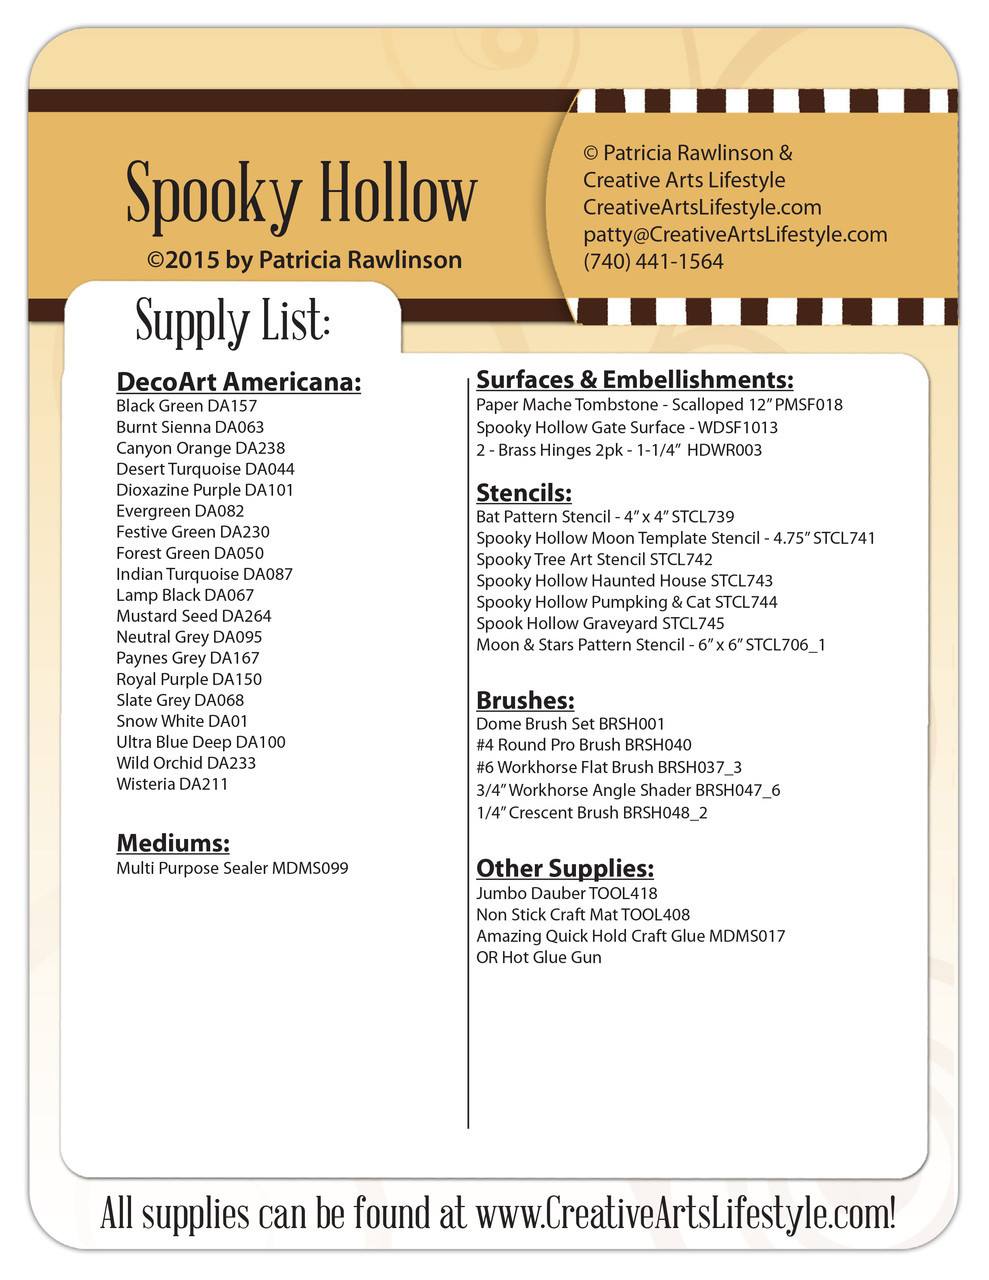 Spooky Hollow - E-Packet - Patricia Rawlinson